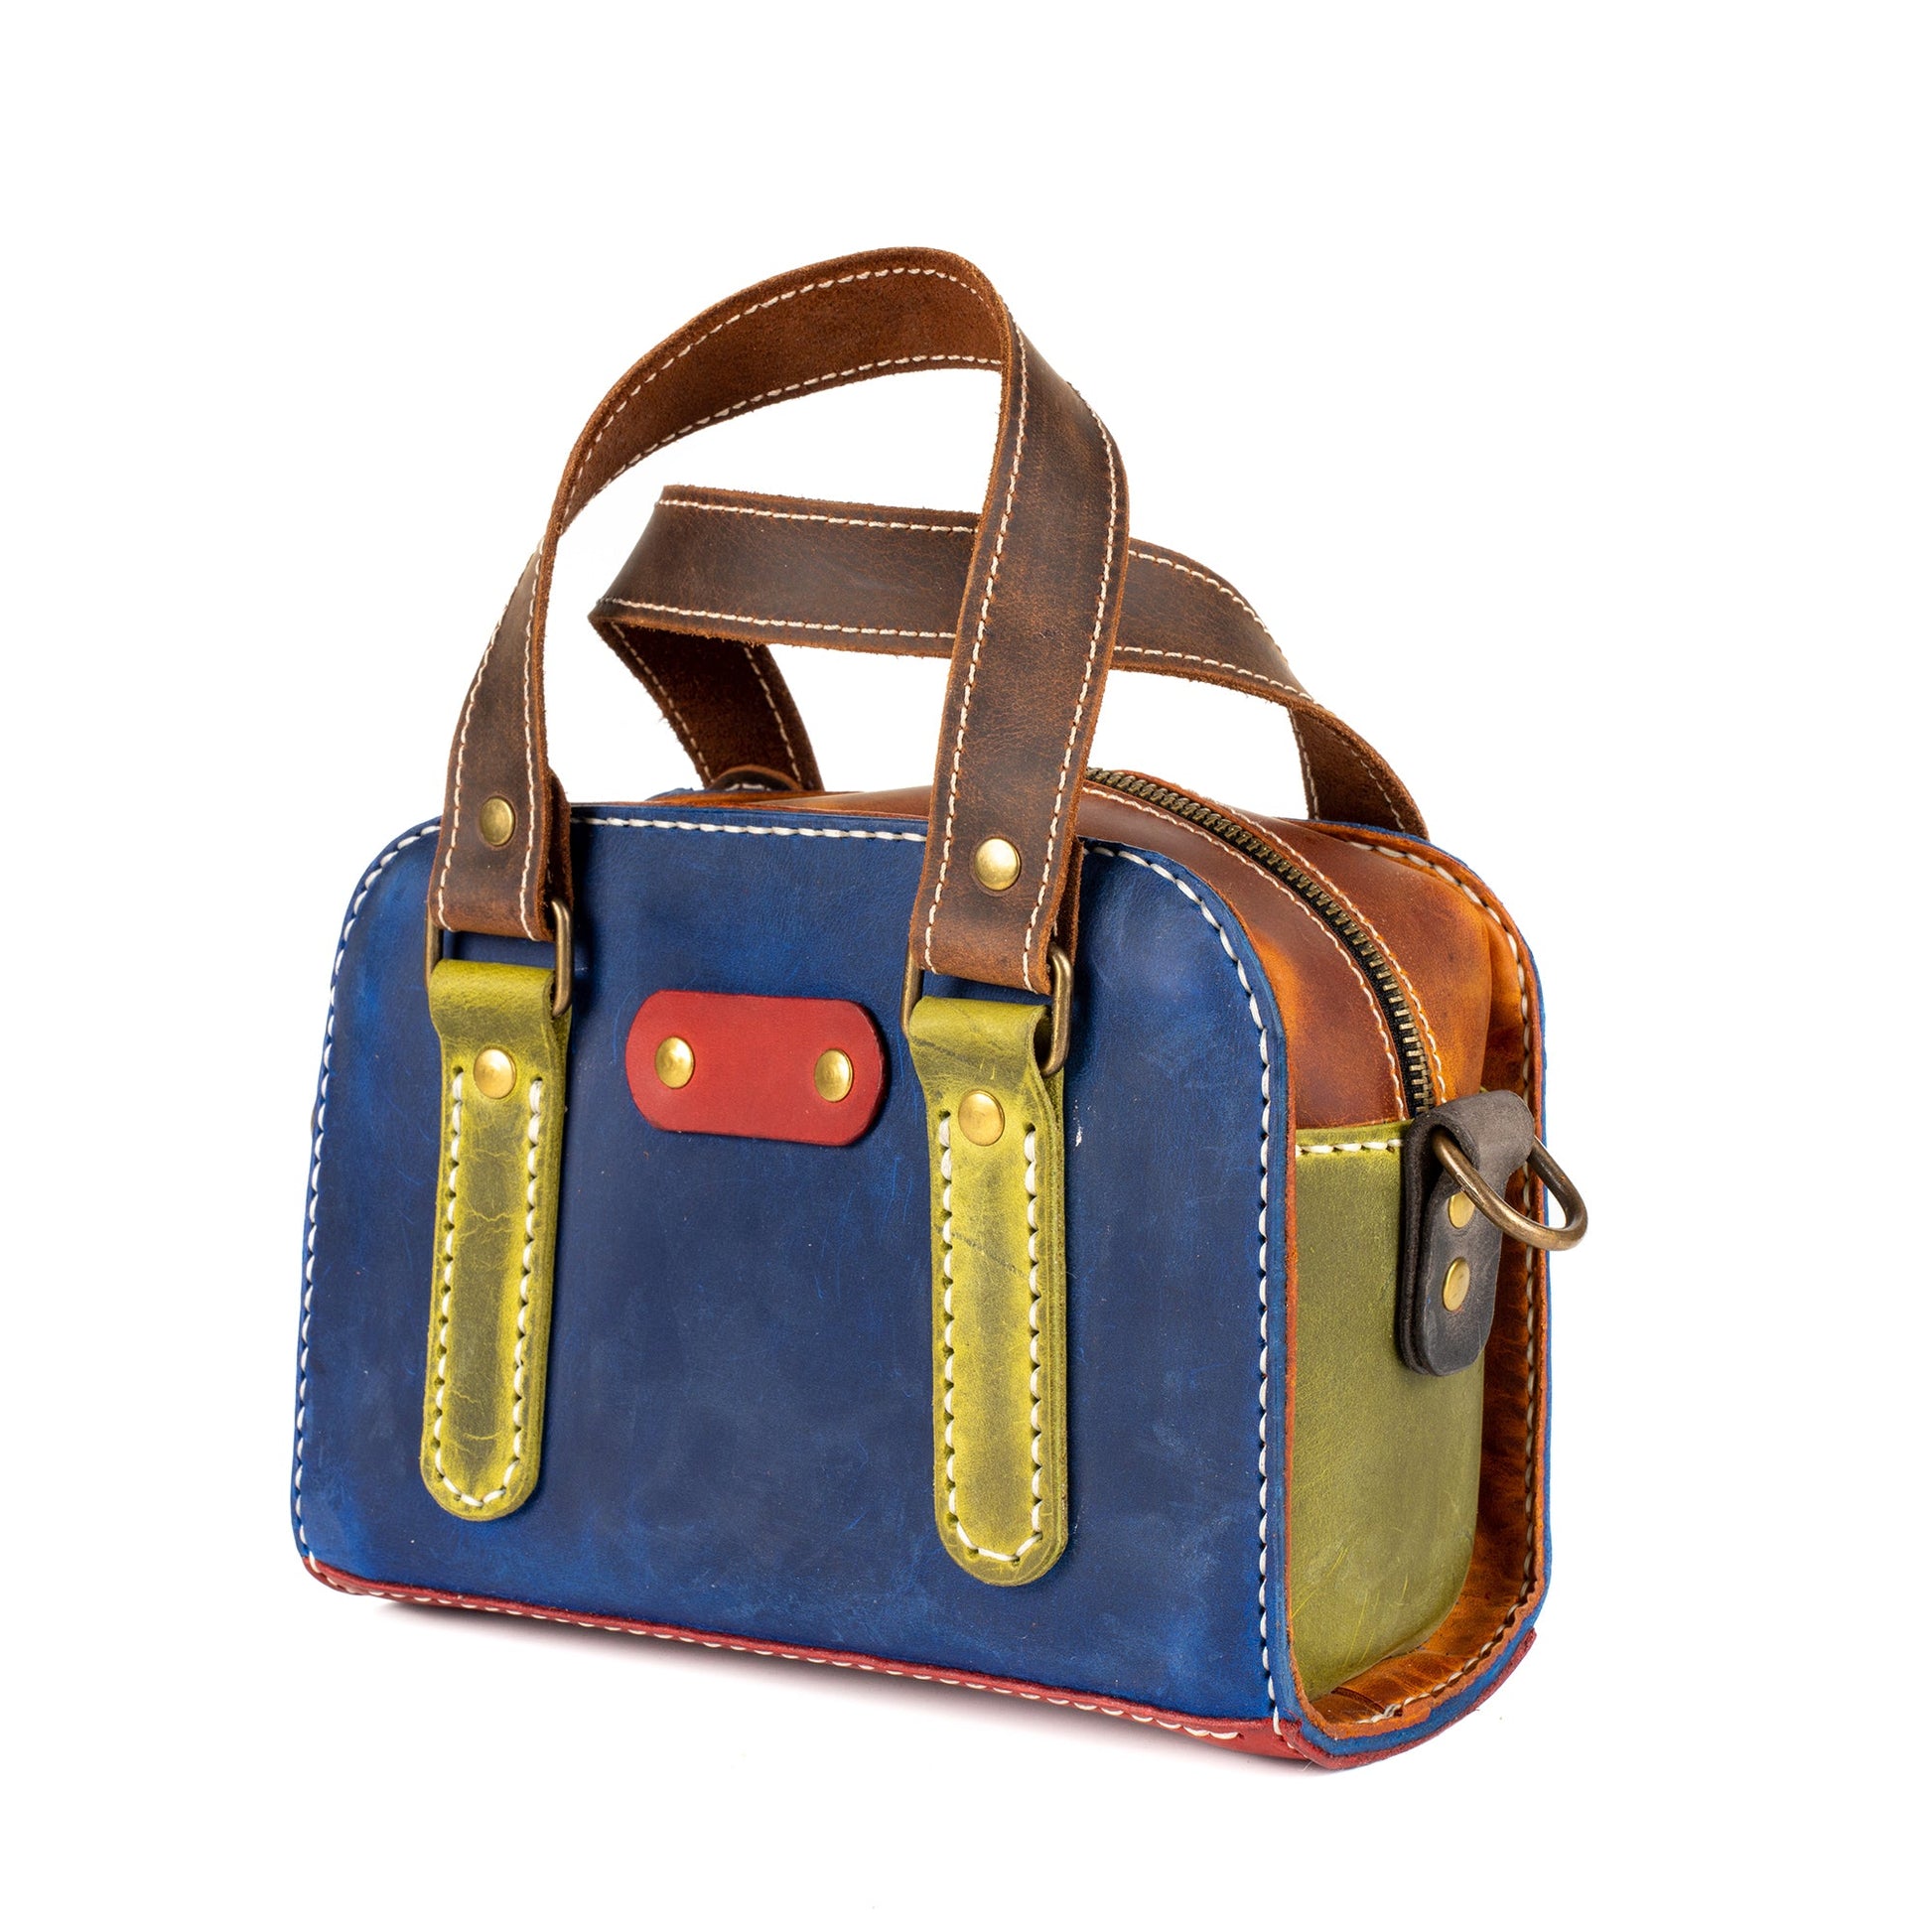 Caunos Blue Leather Top Handle Bag - Accessories Zengoda Shop online from Artisan Brands